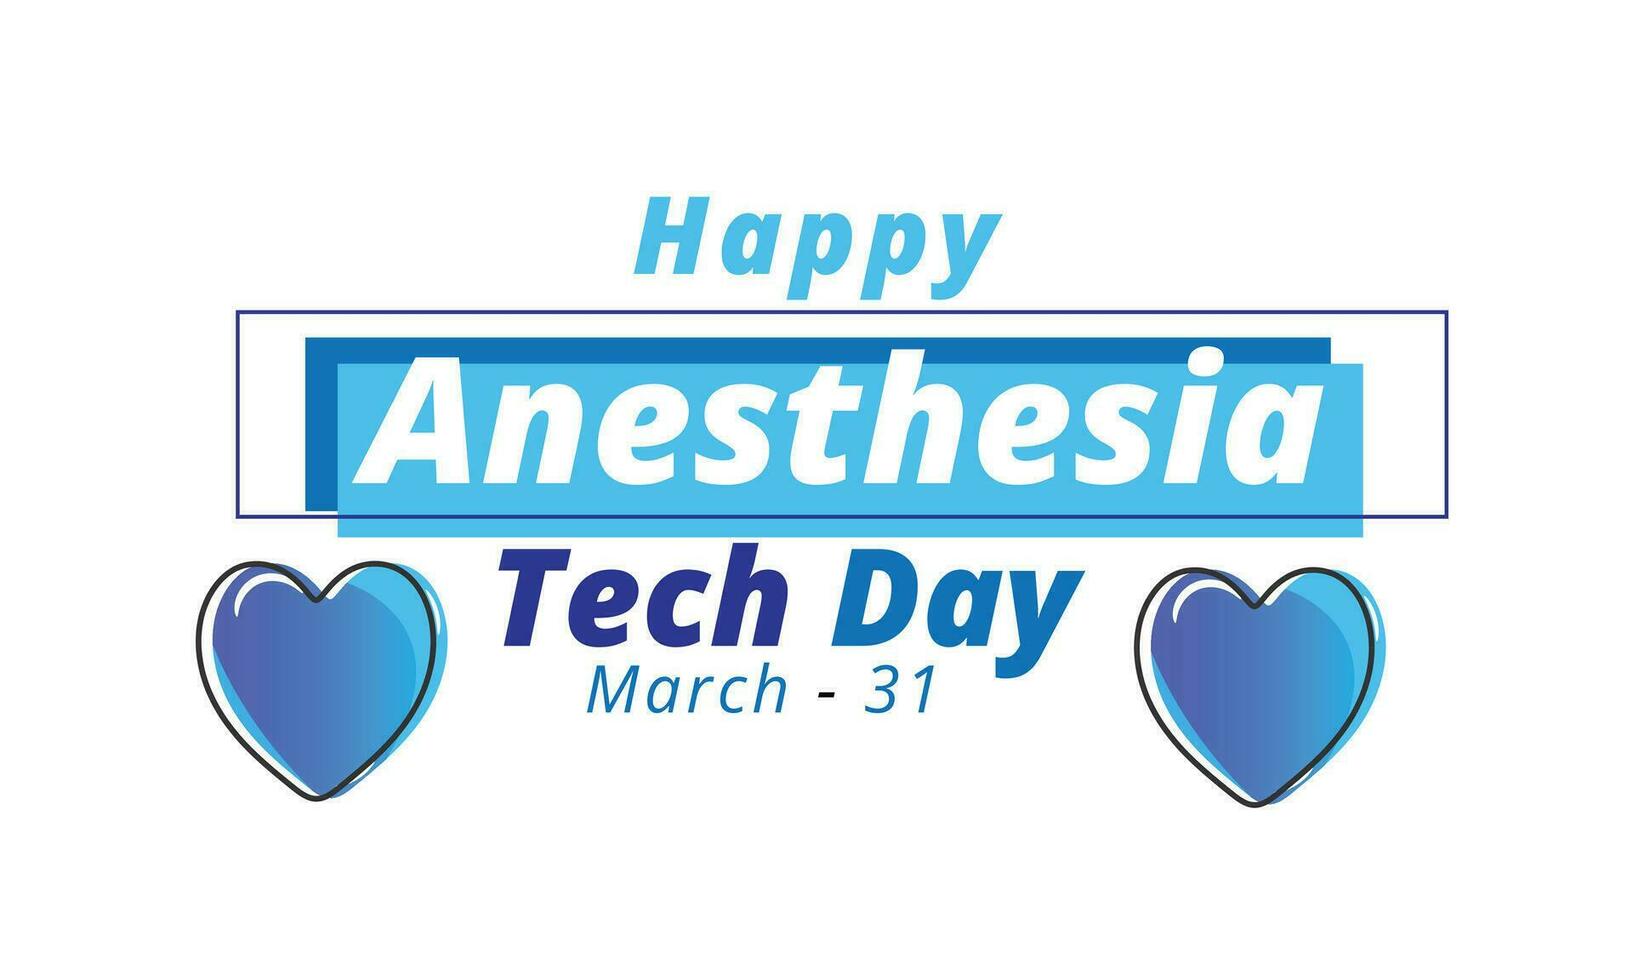 anesthesie tech dag. achtergrond, banier, kaart, poster, sjabloon. vector illustratie.